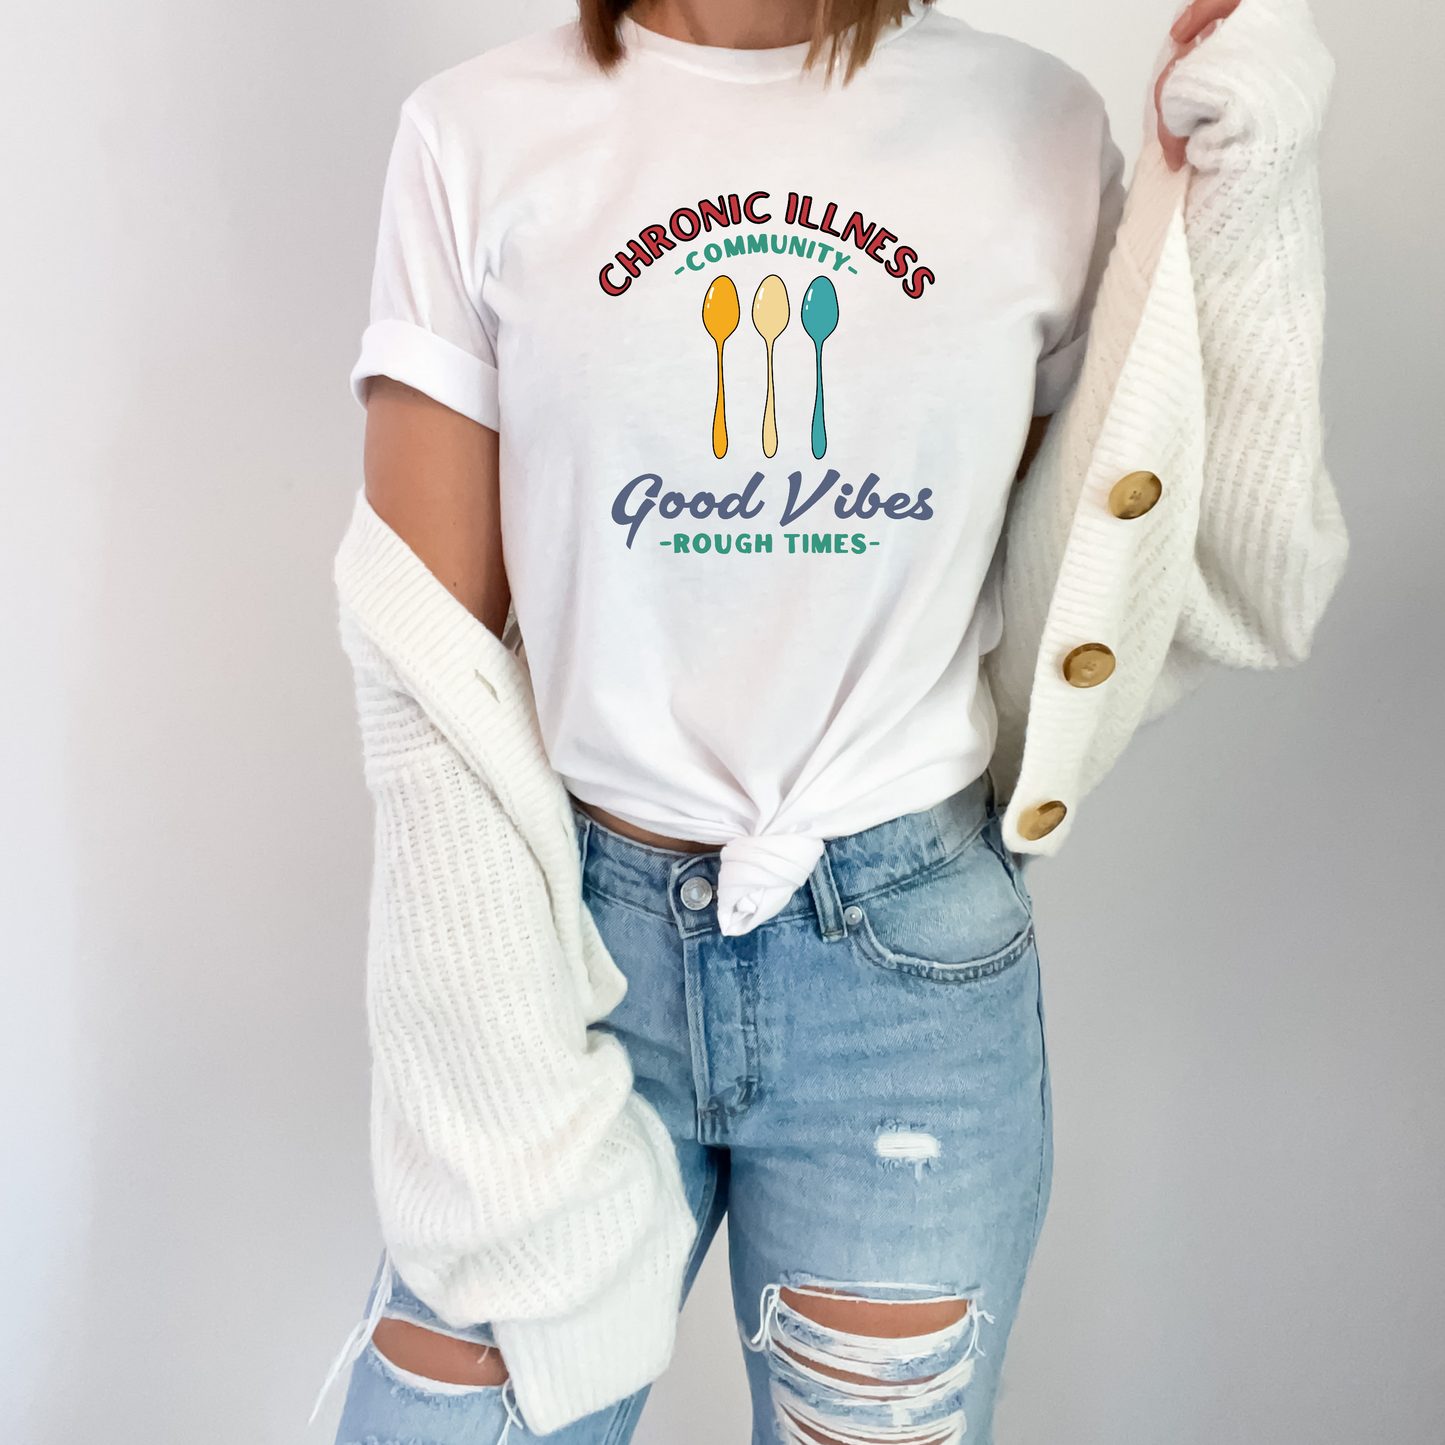 Chronic Illness Community T-shirt